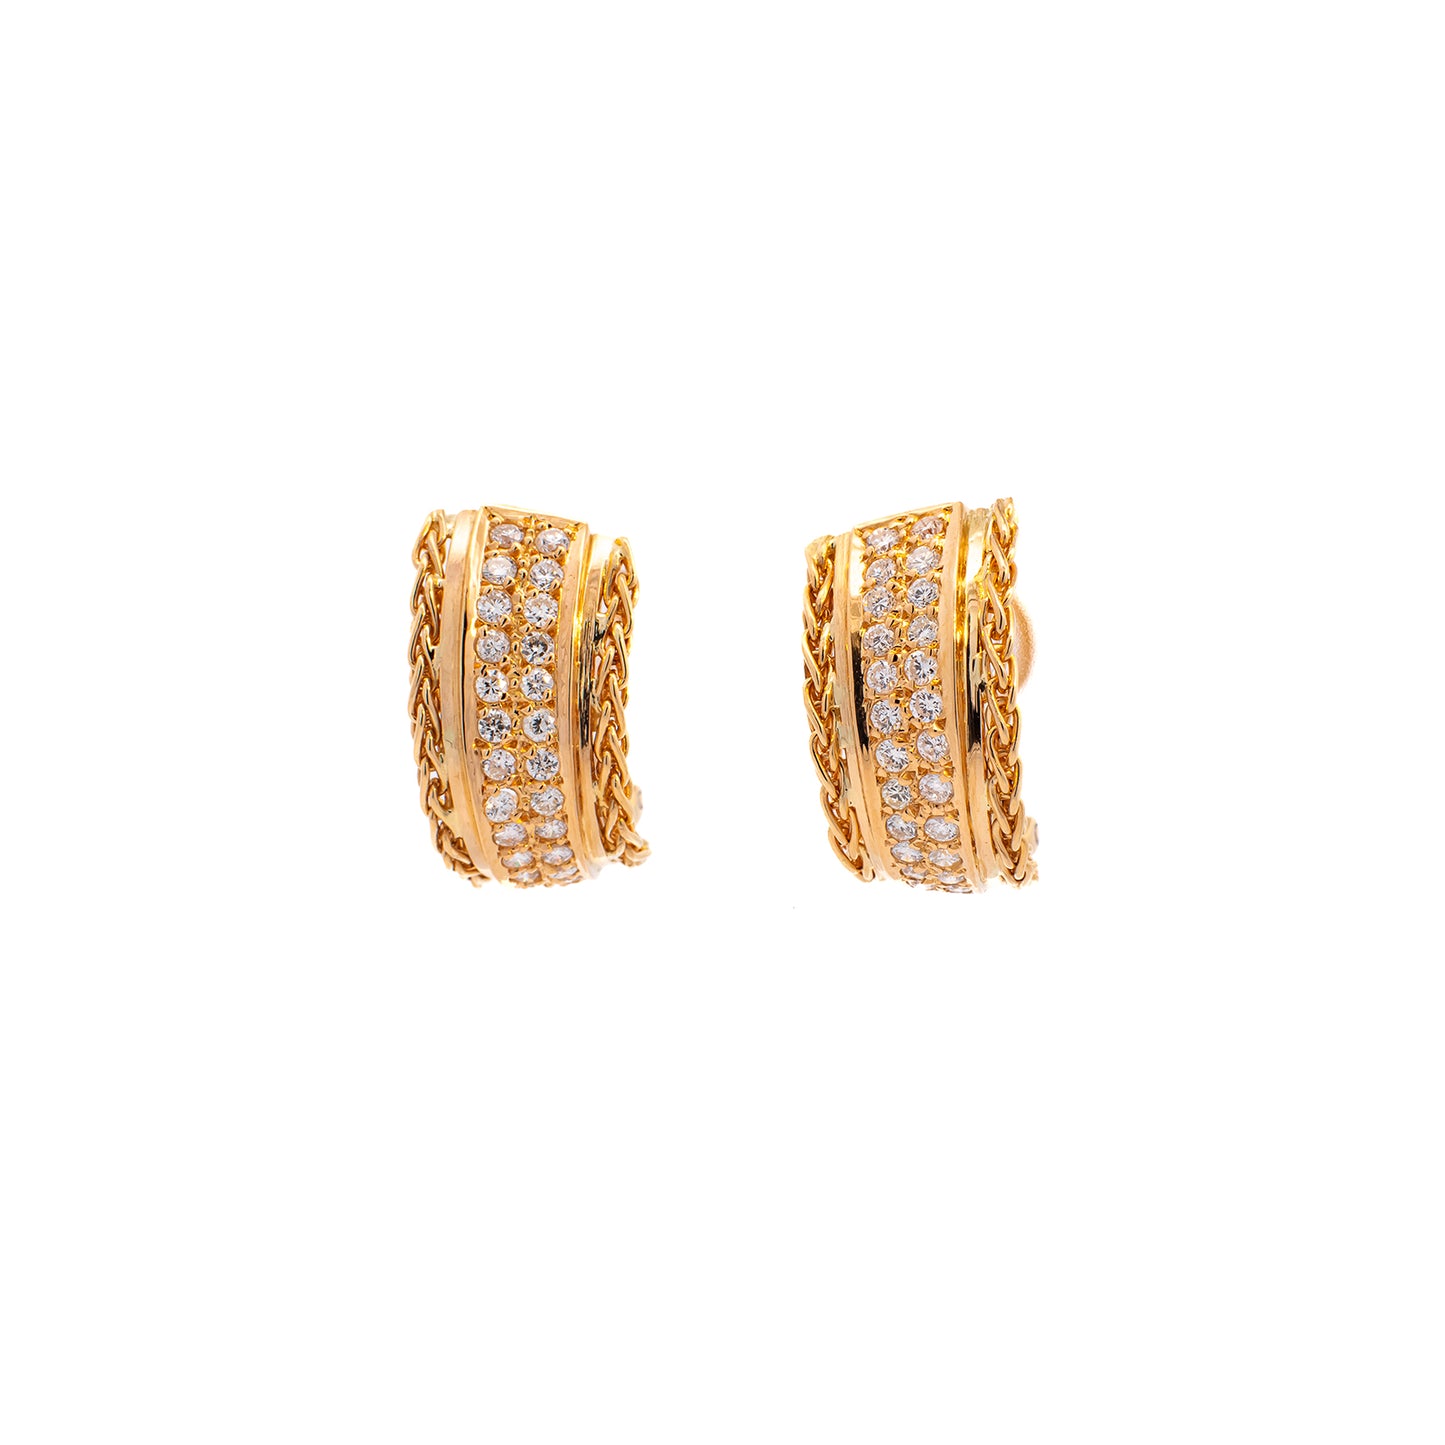 Copy of diamond earrings omega clasp yellow gold 18K earrings gold earrings earrings